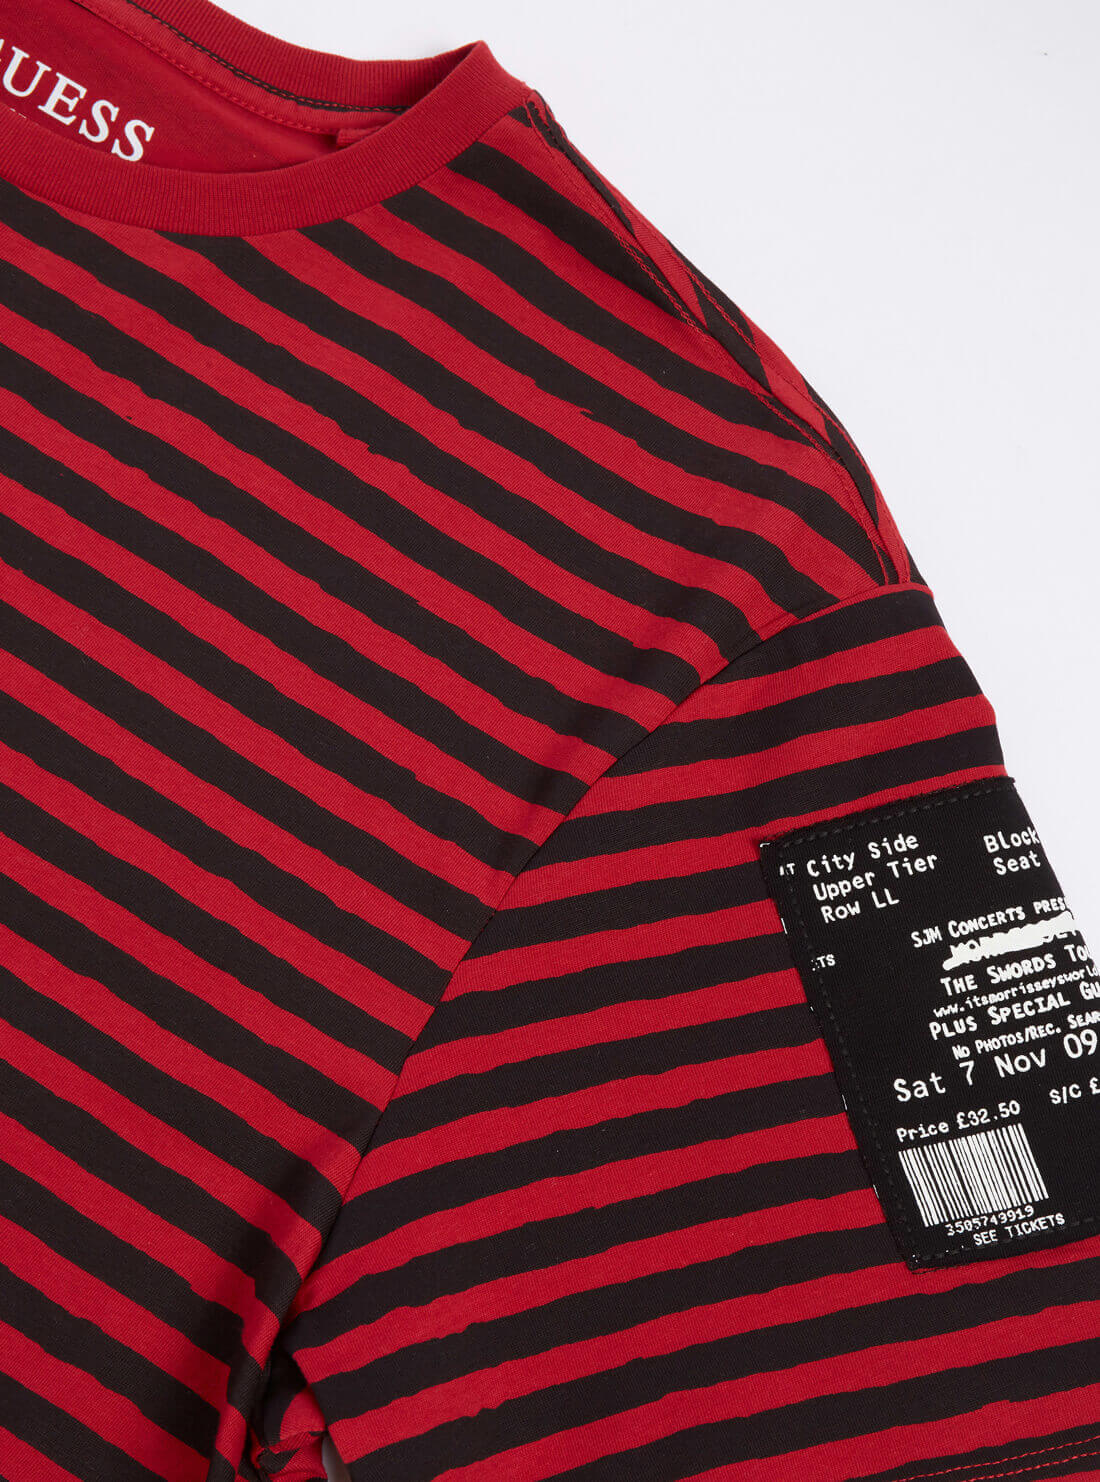 GUESS Mens Eco Red Stripe LA Nights T-Shirt MBRI25K8HA6 Sleeve Detail View